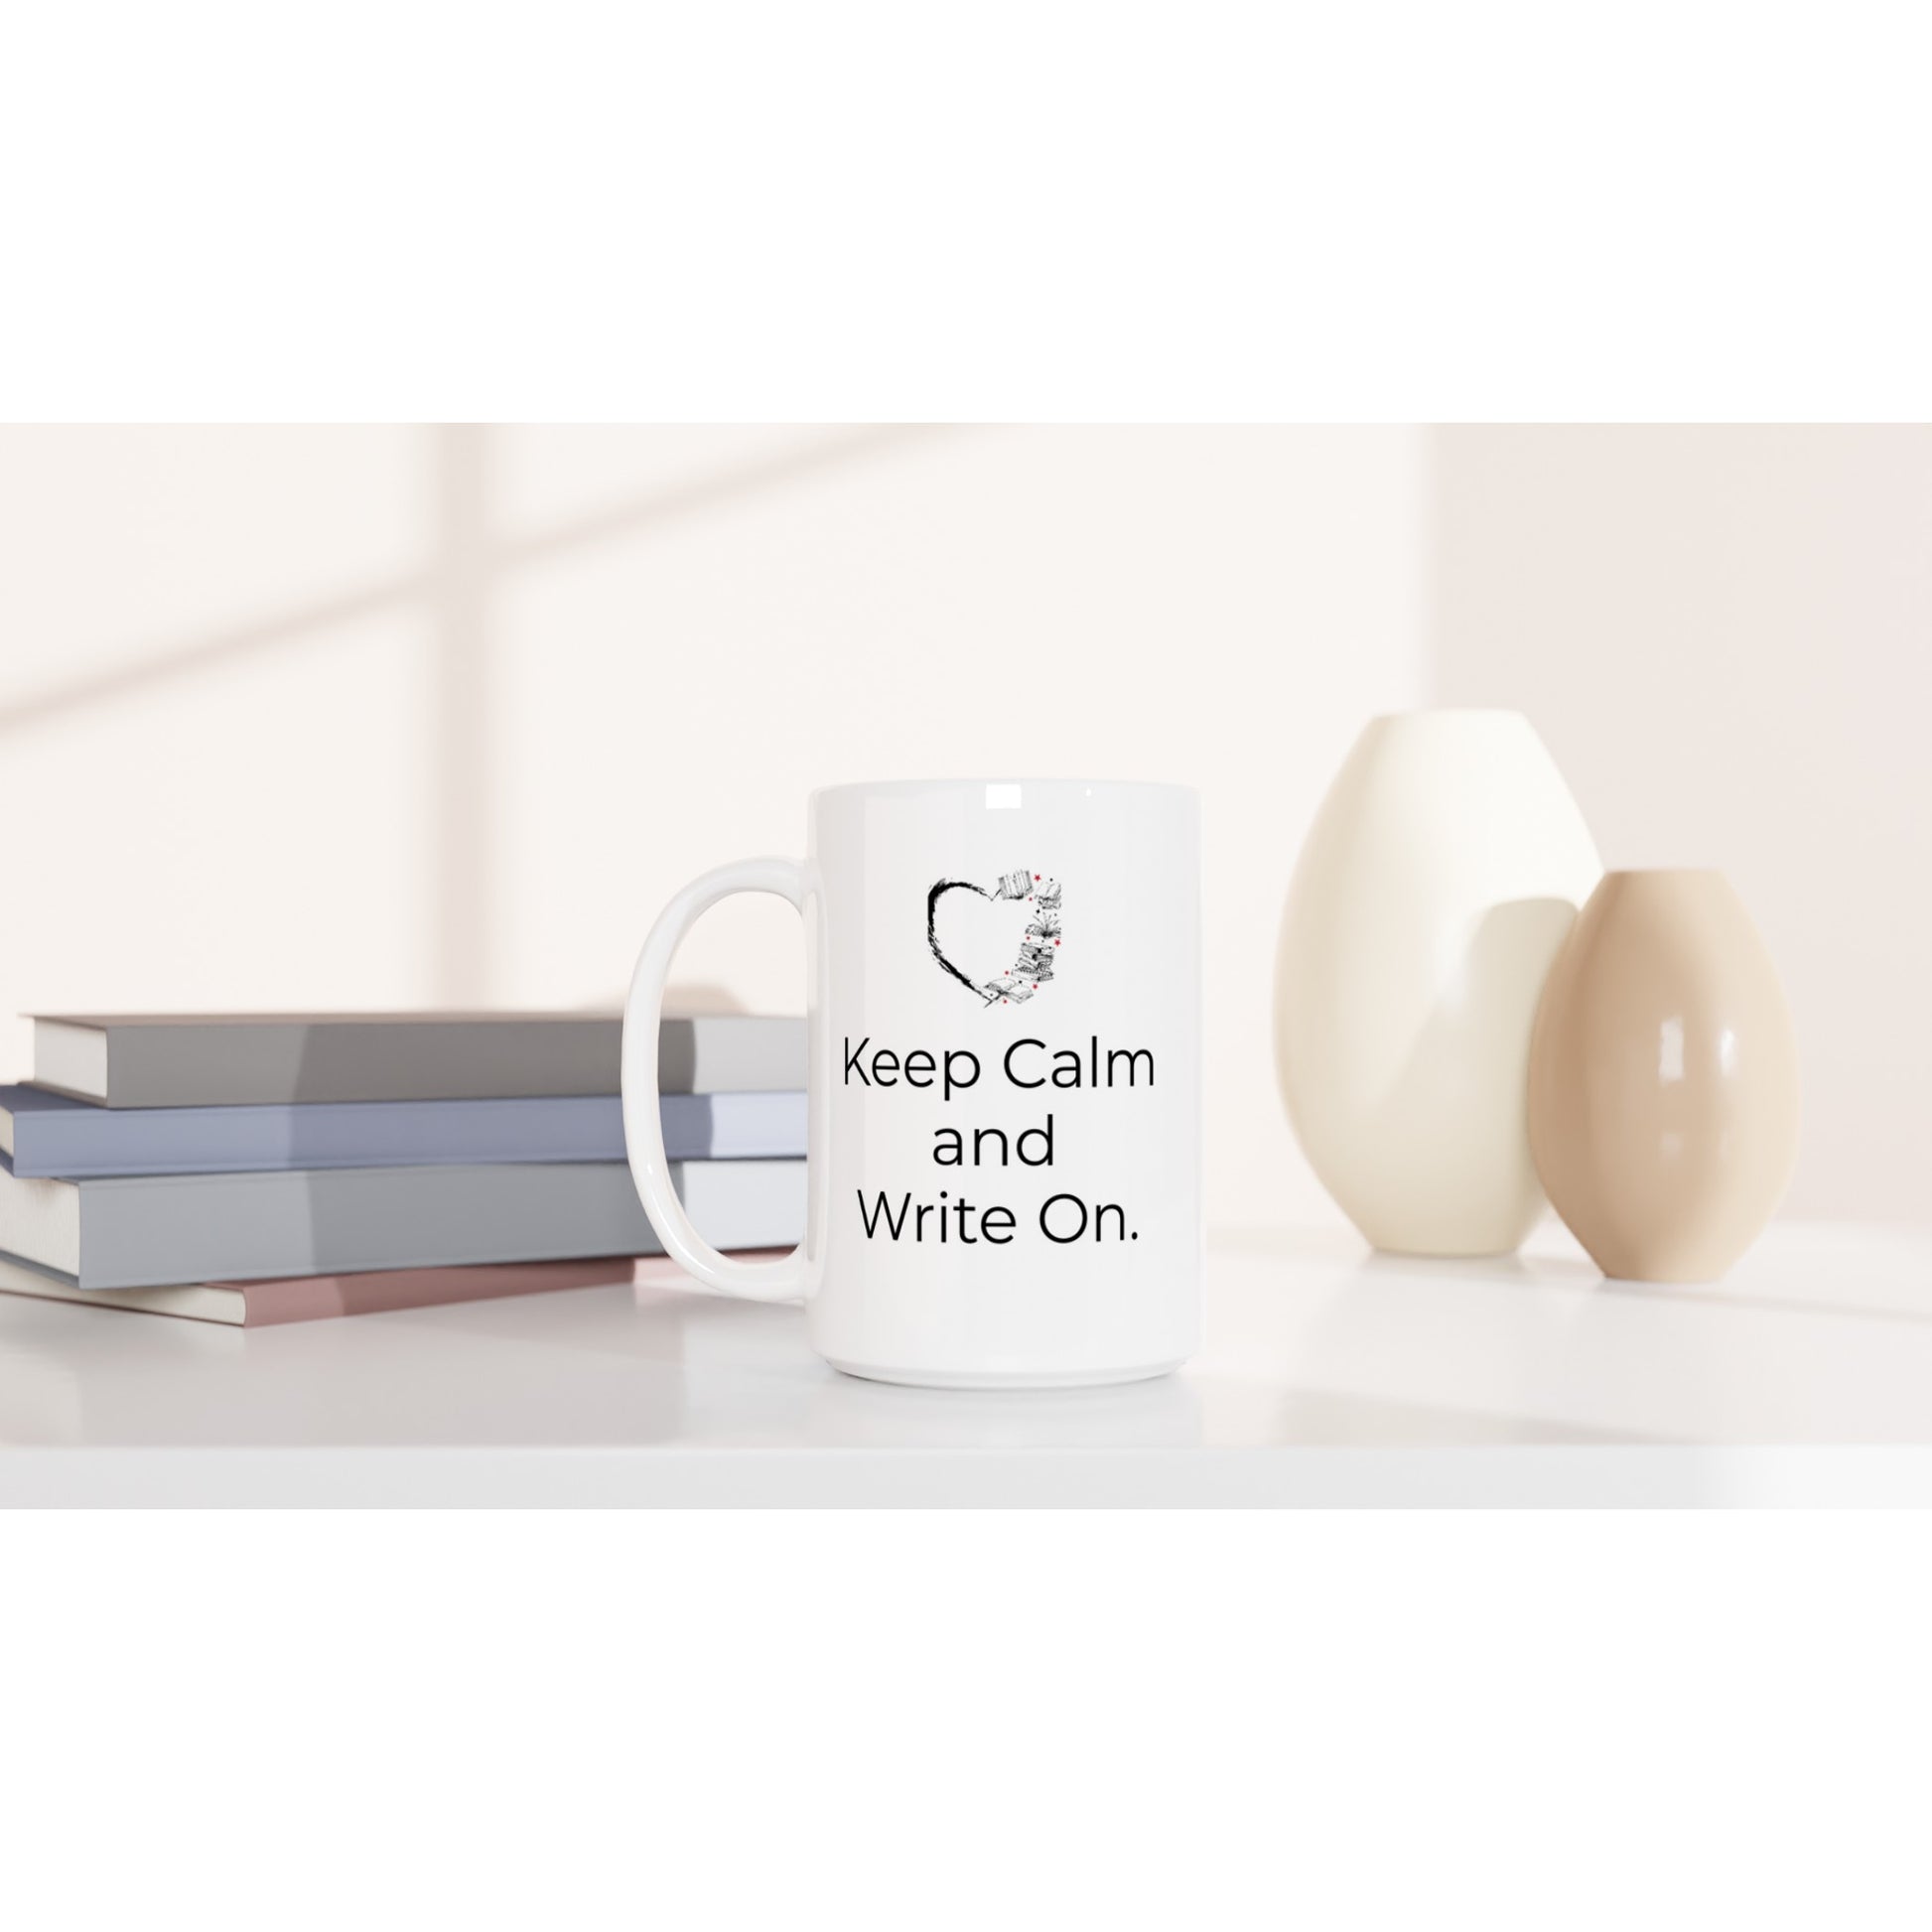 This white ceramic mug features the phrase "Keep Calm and Write On" // Writing Themed Mug.